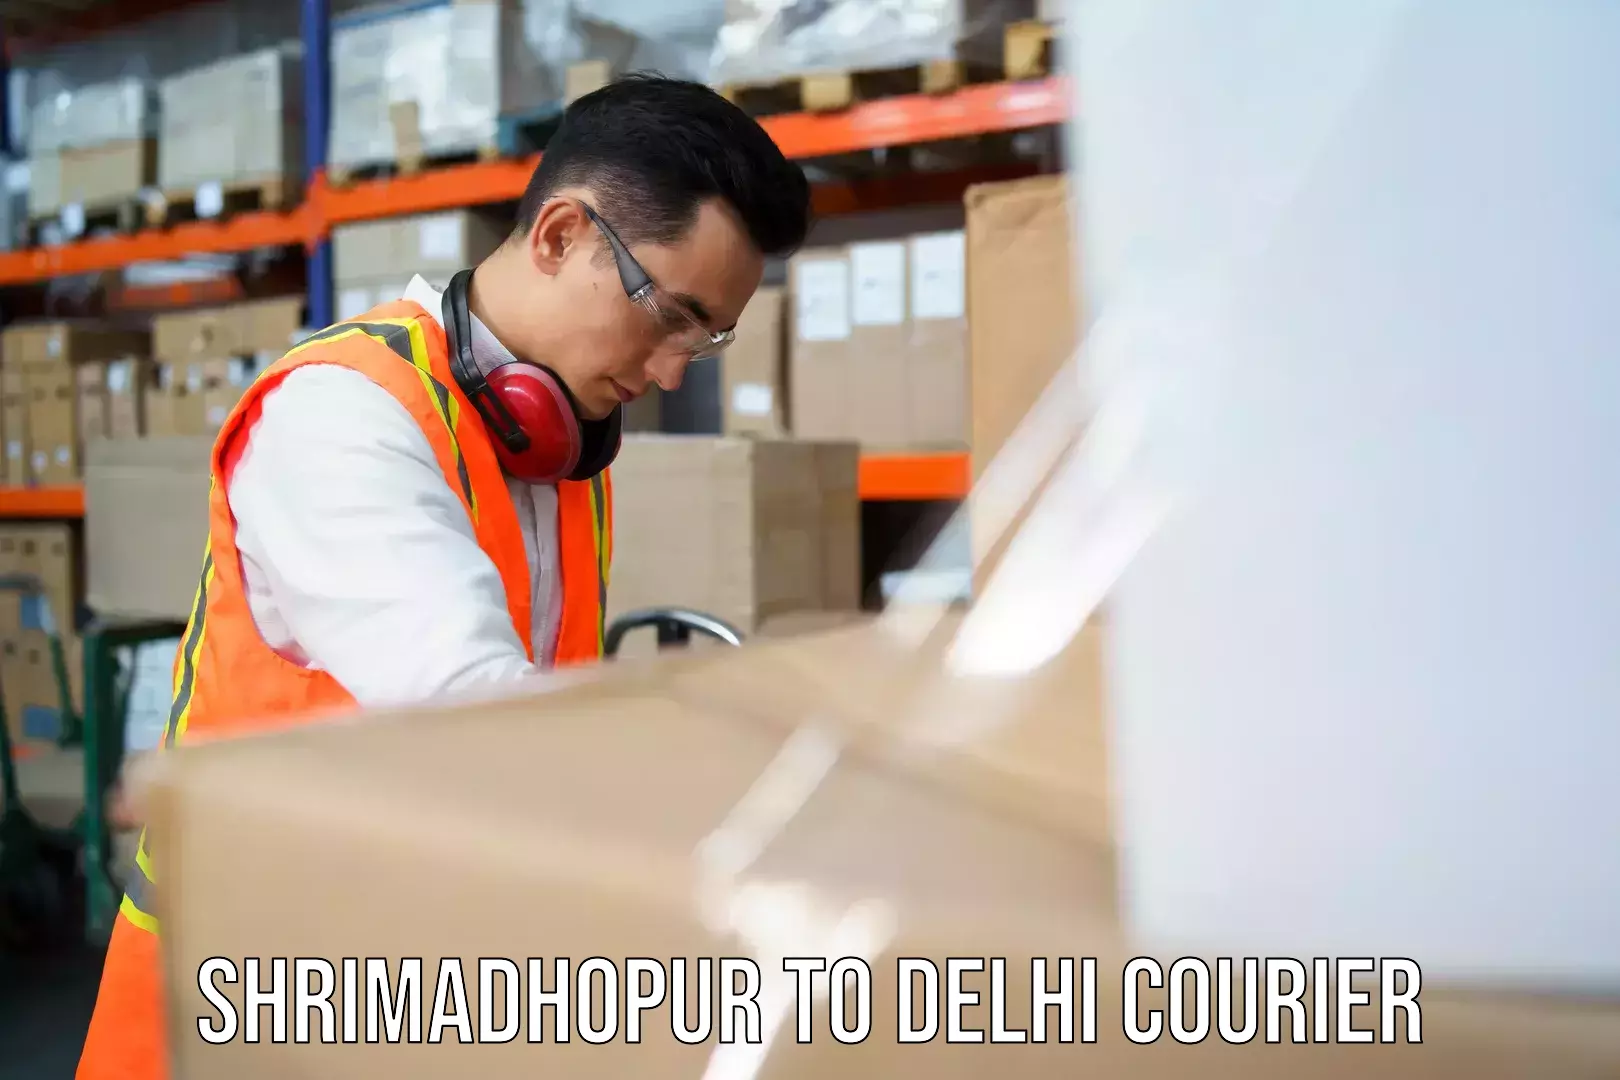 Digital courier platforms Shrimadhopur to Ashok Vihar